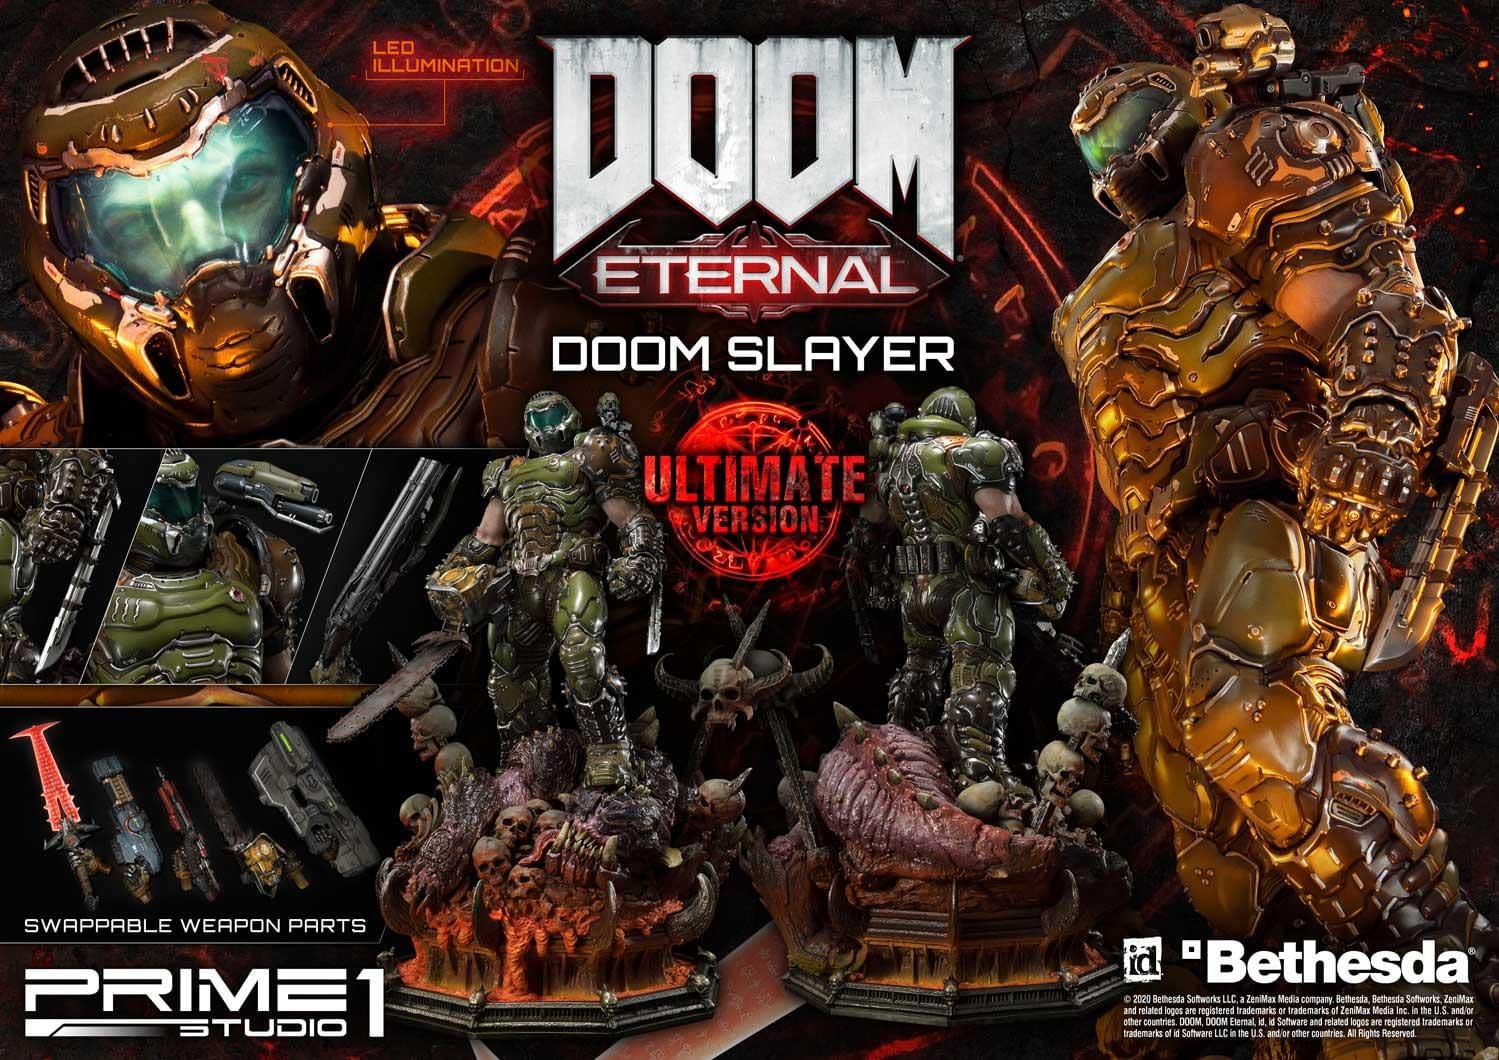 "Doom Eternal" Comes to Life in New Prime 1 Studio Statue 